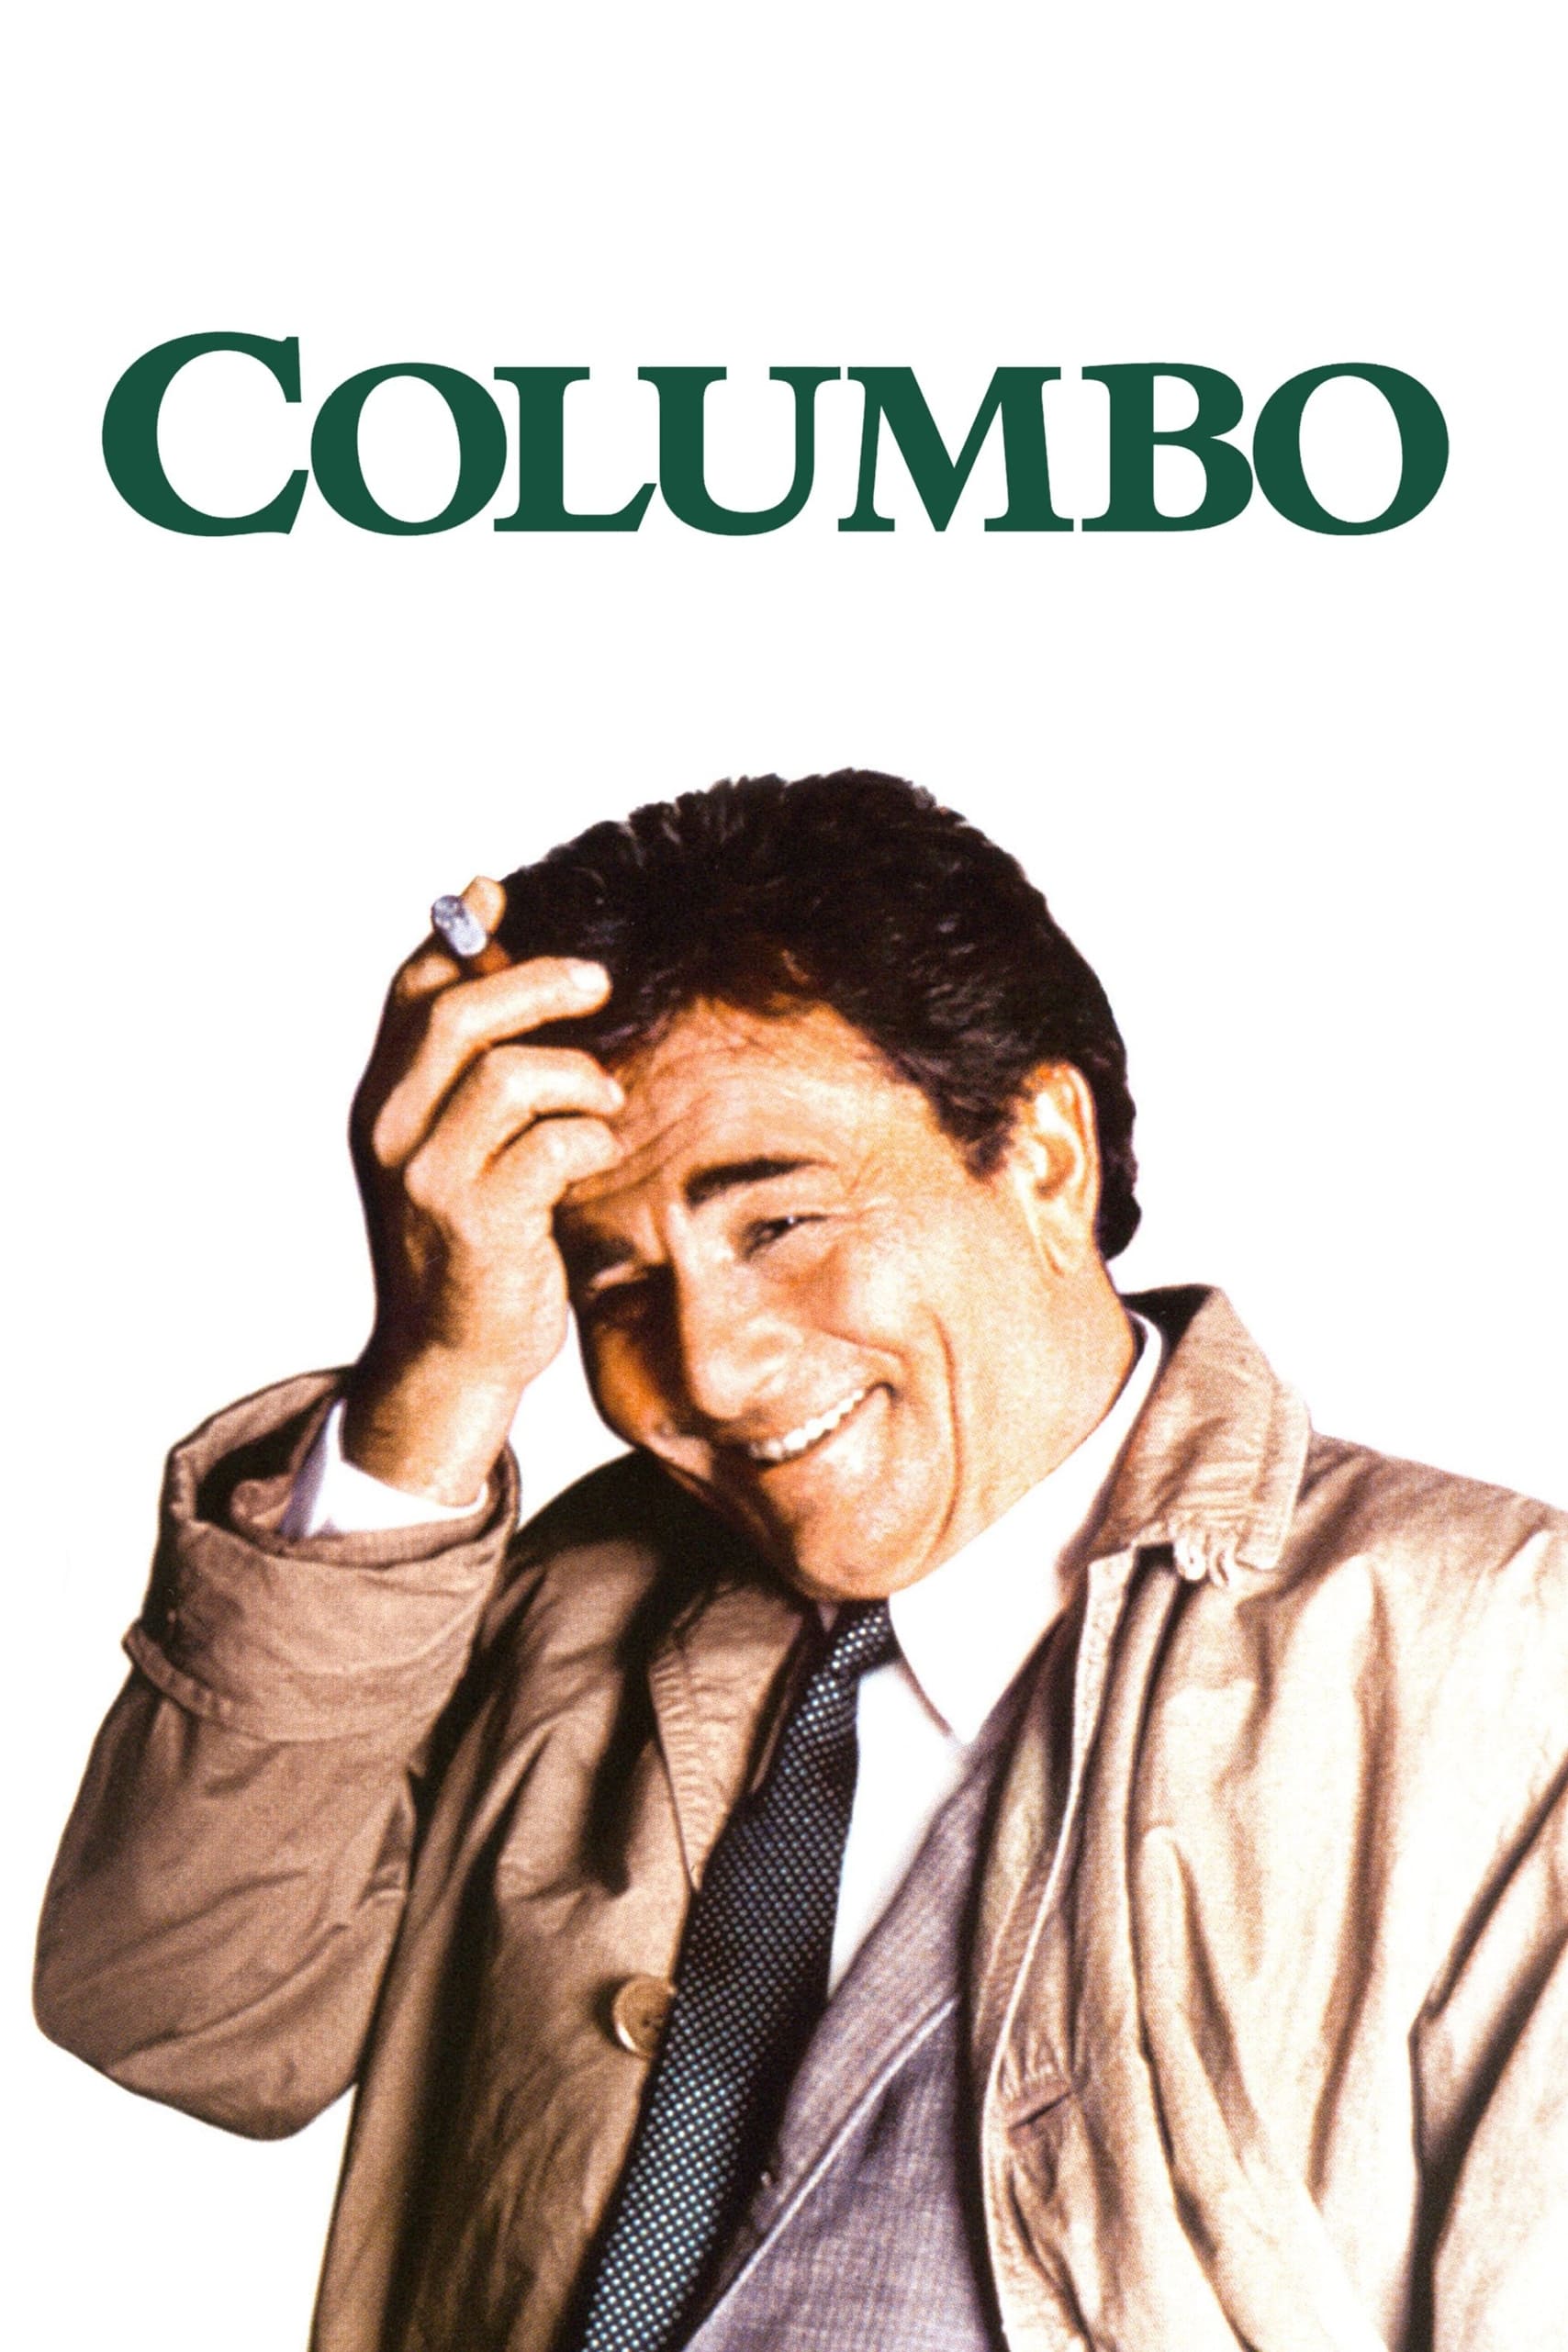 Watch Columbo (1971) TV Series Free Online - Plex